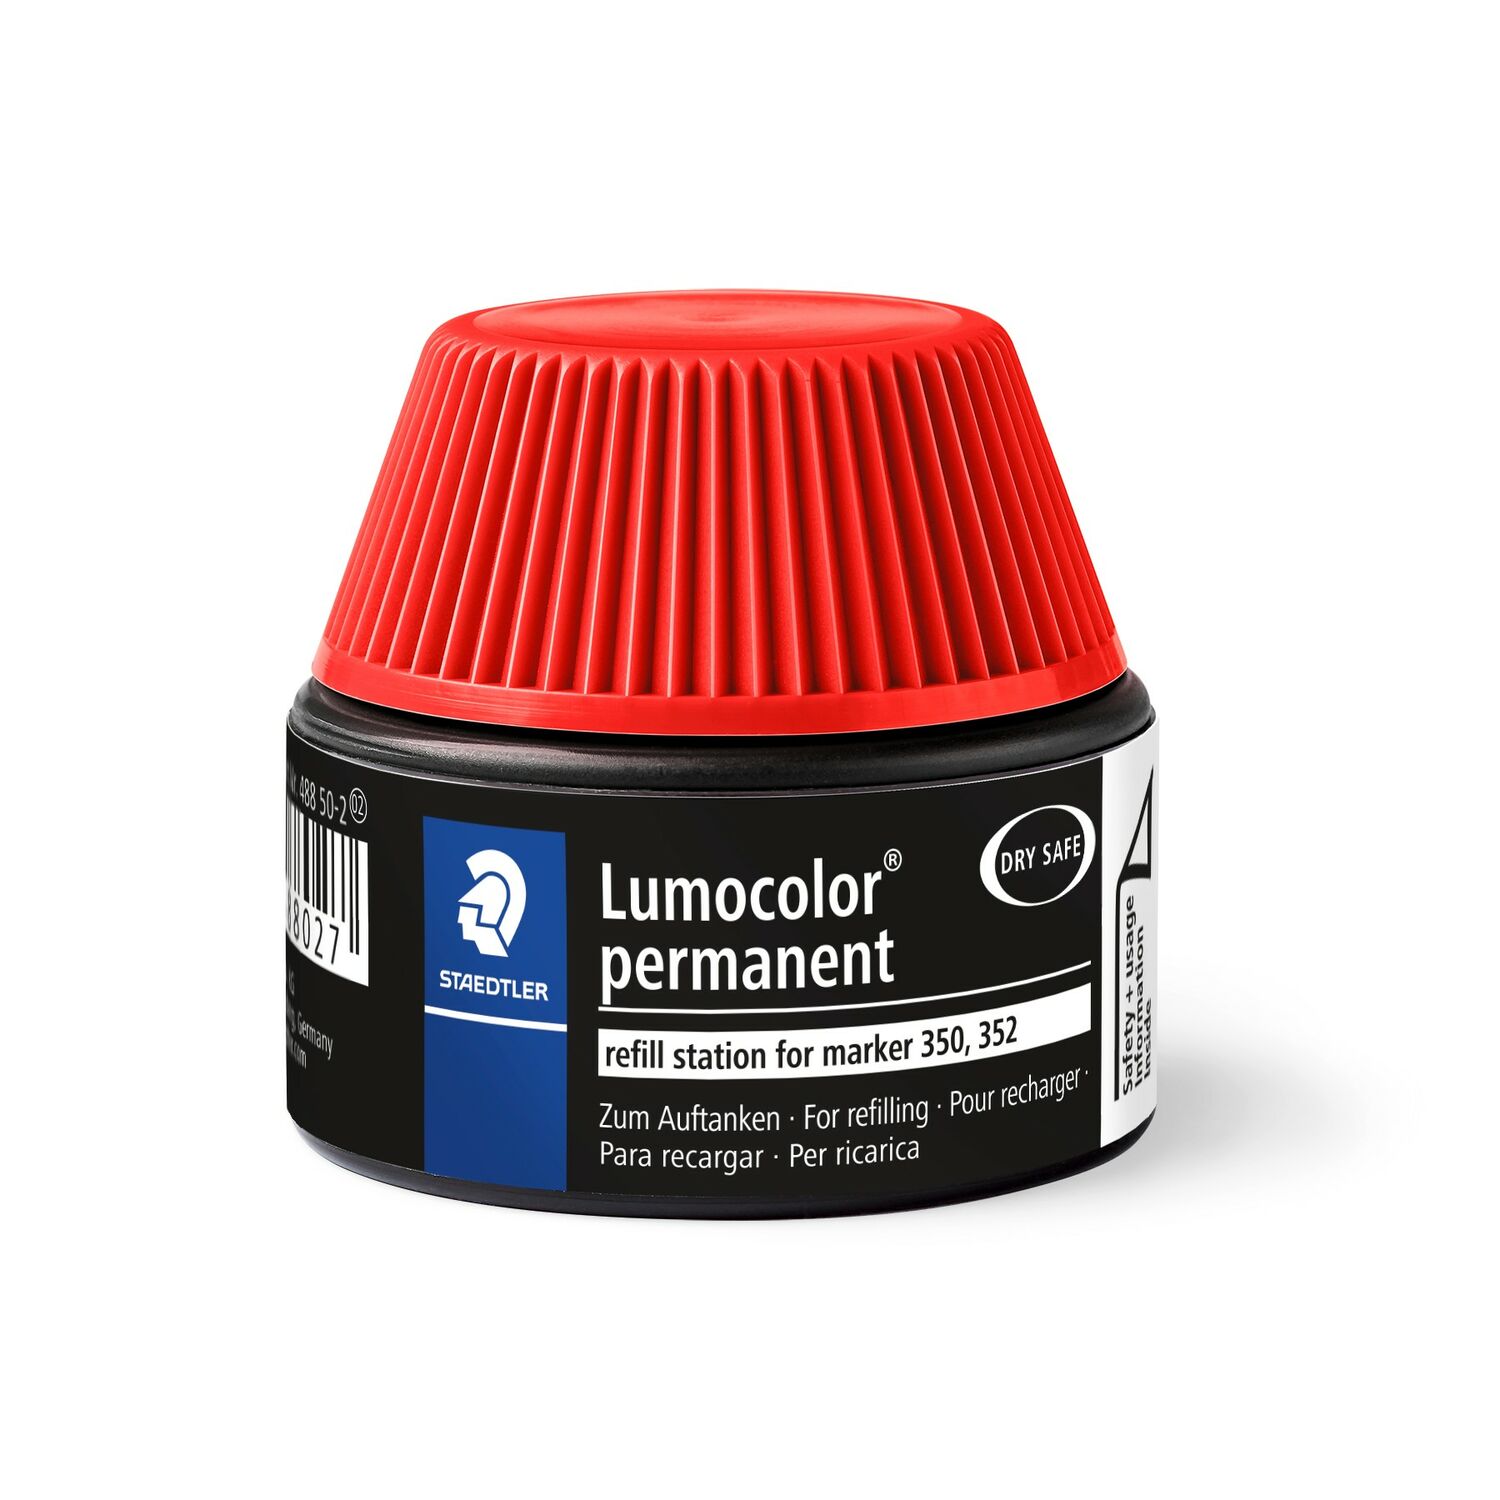 Lumocolor® permanent marker refill station 488 50 - Estação de recarga para marcadores permanentes Lumocolor 350 e 352